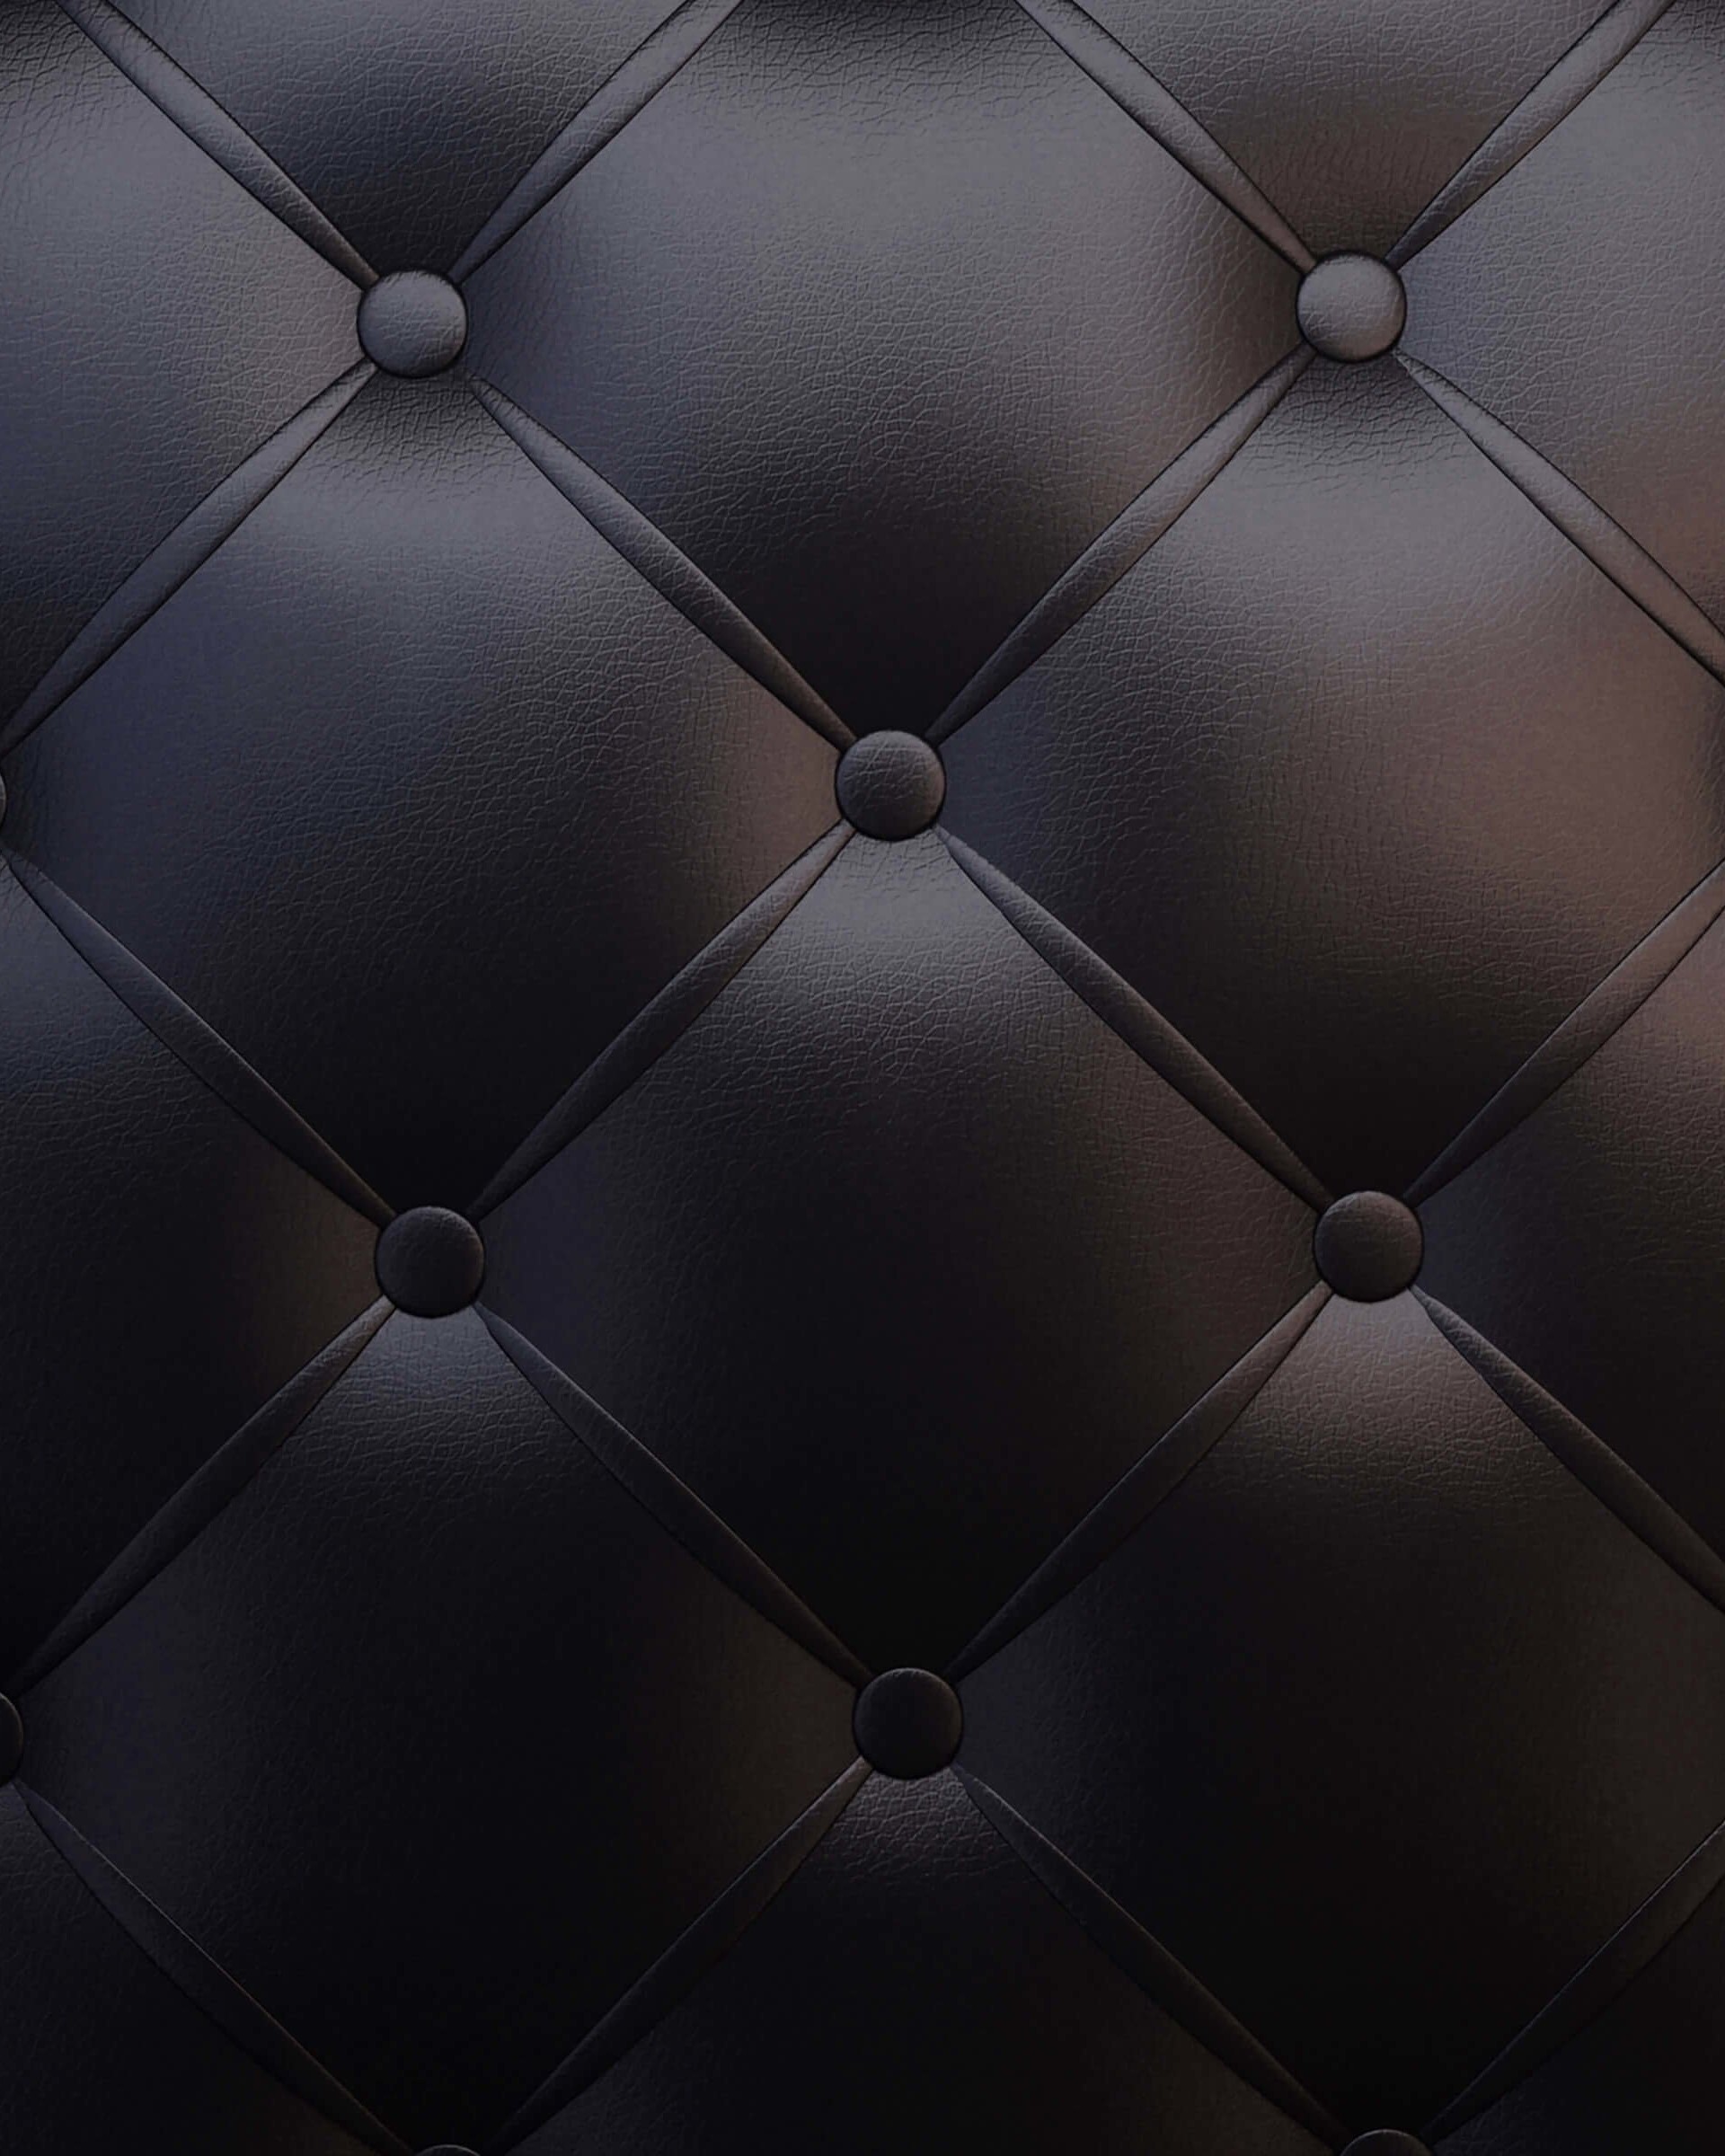 Black Leather Vintage Sofa Wallpaper for Google Nexus 7